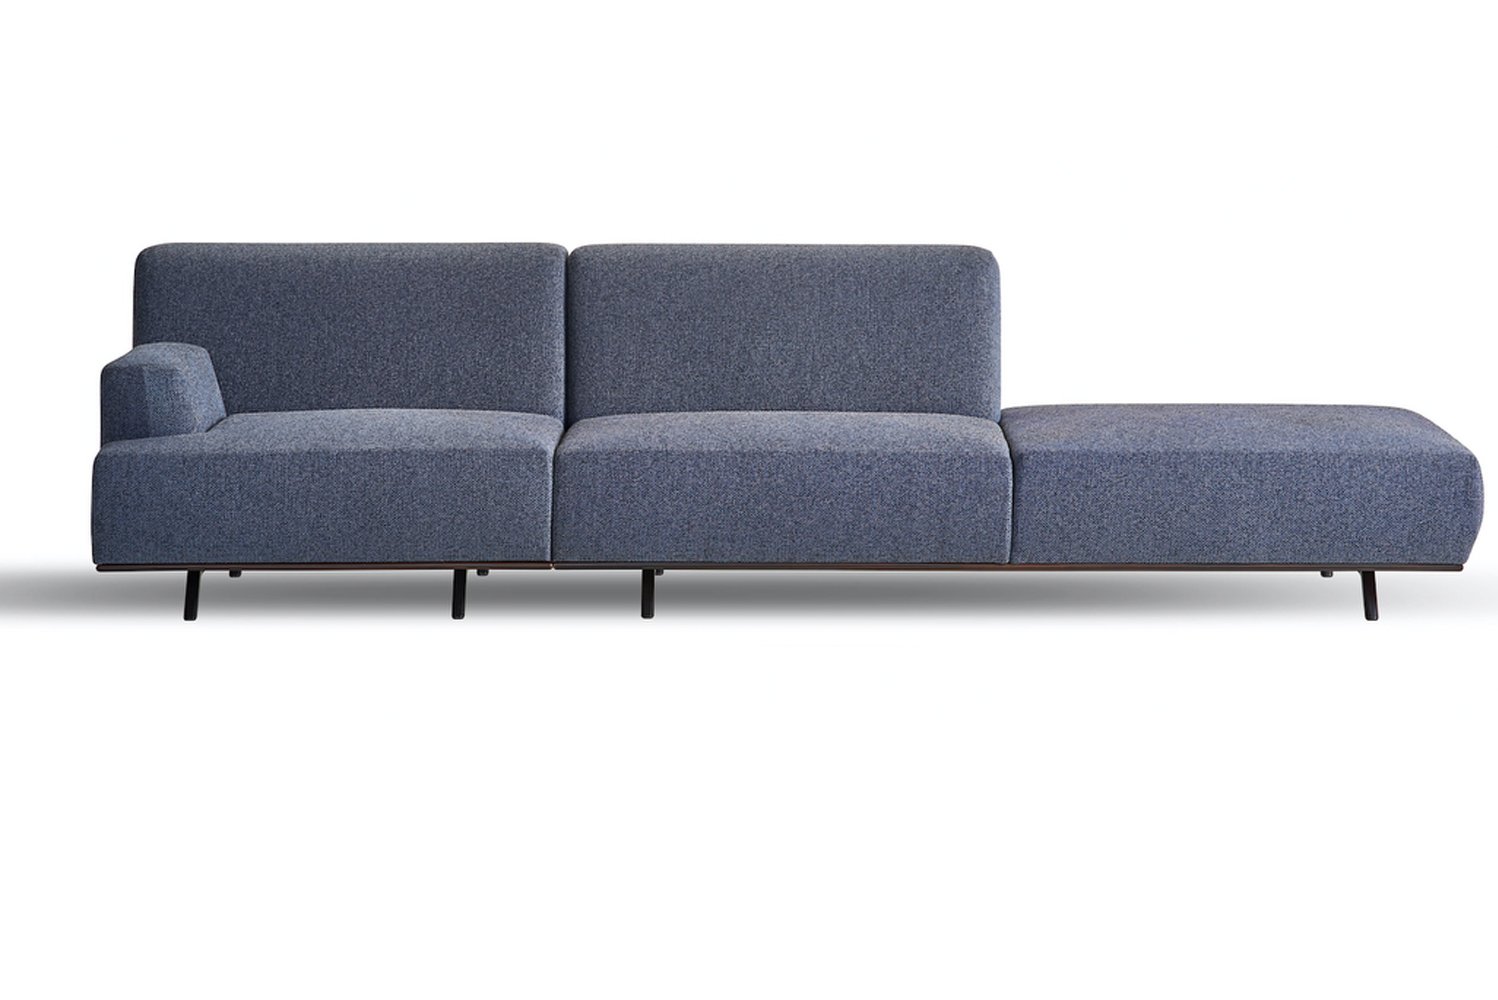 The Oscar sofa designed by Studio Kairos for Koleksiyon has an elongated delicate frame spun from slender metal legs that 